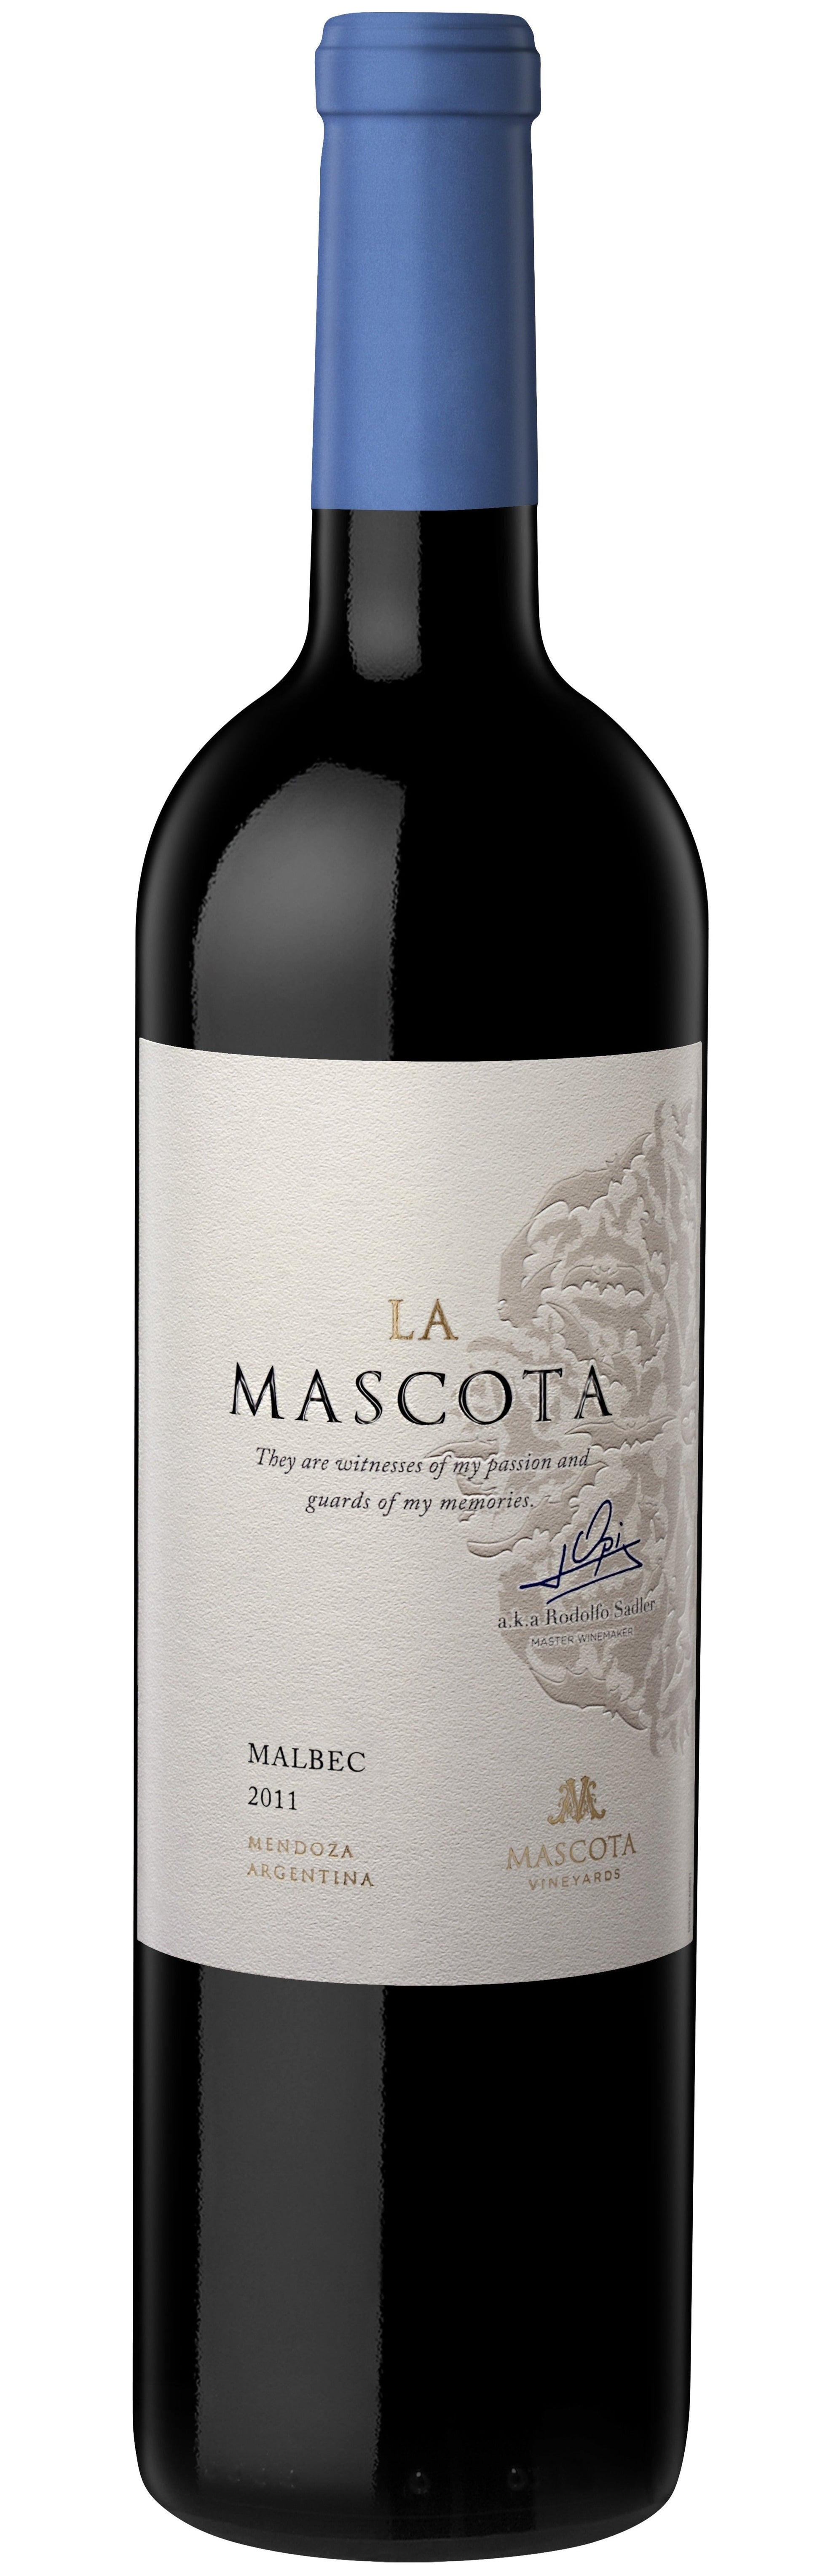 La Mascota Malbec - Premium Red Wine from Mascota Vineyards - Shop now at Whiskery